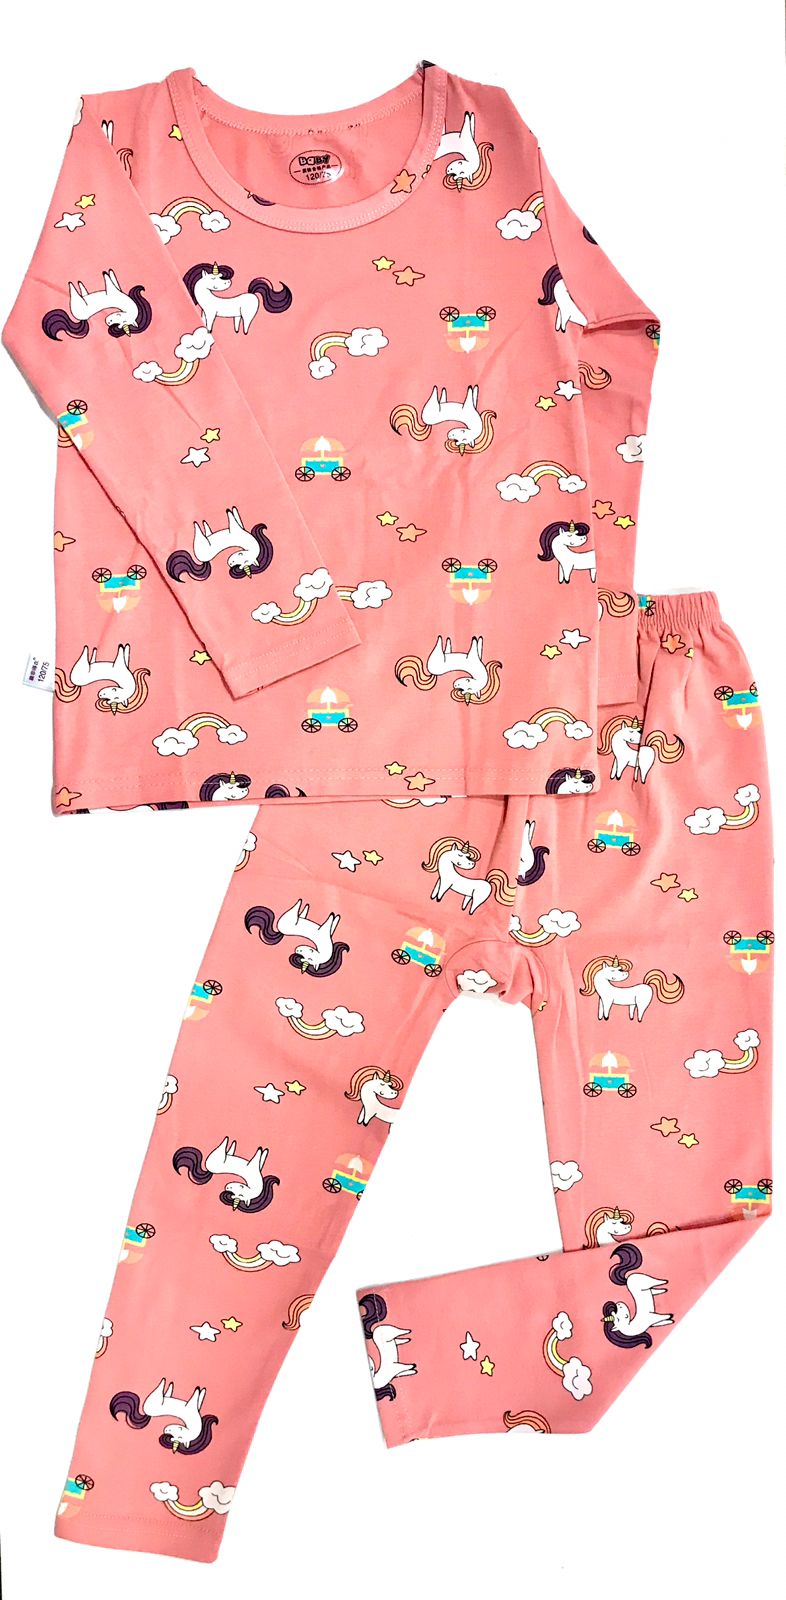 Colorful Patterns Children's Sleepwear Pajama Unicorn Pink